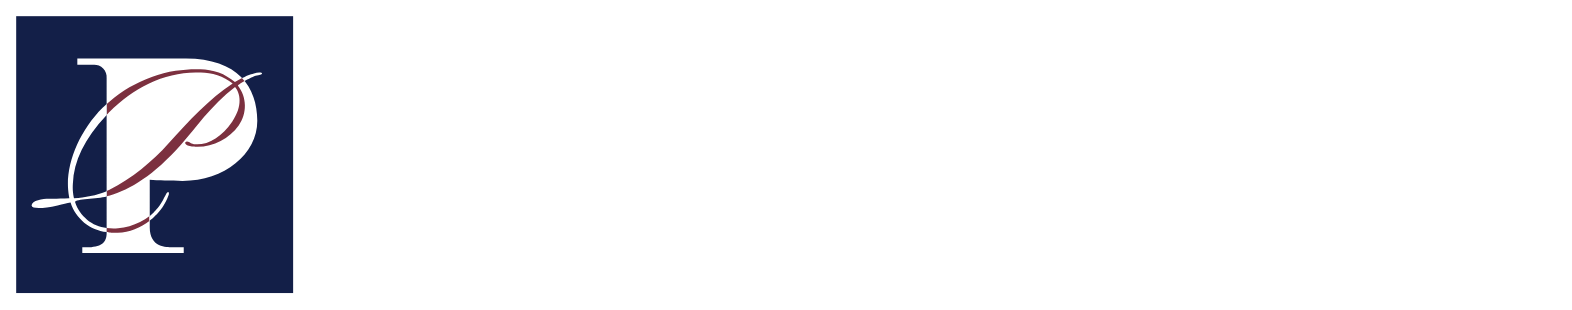 Pacific Premier Bancorp
 logo large for dark backgrounds (transparent PNG)